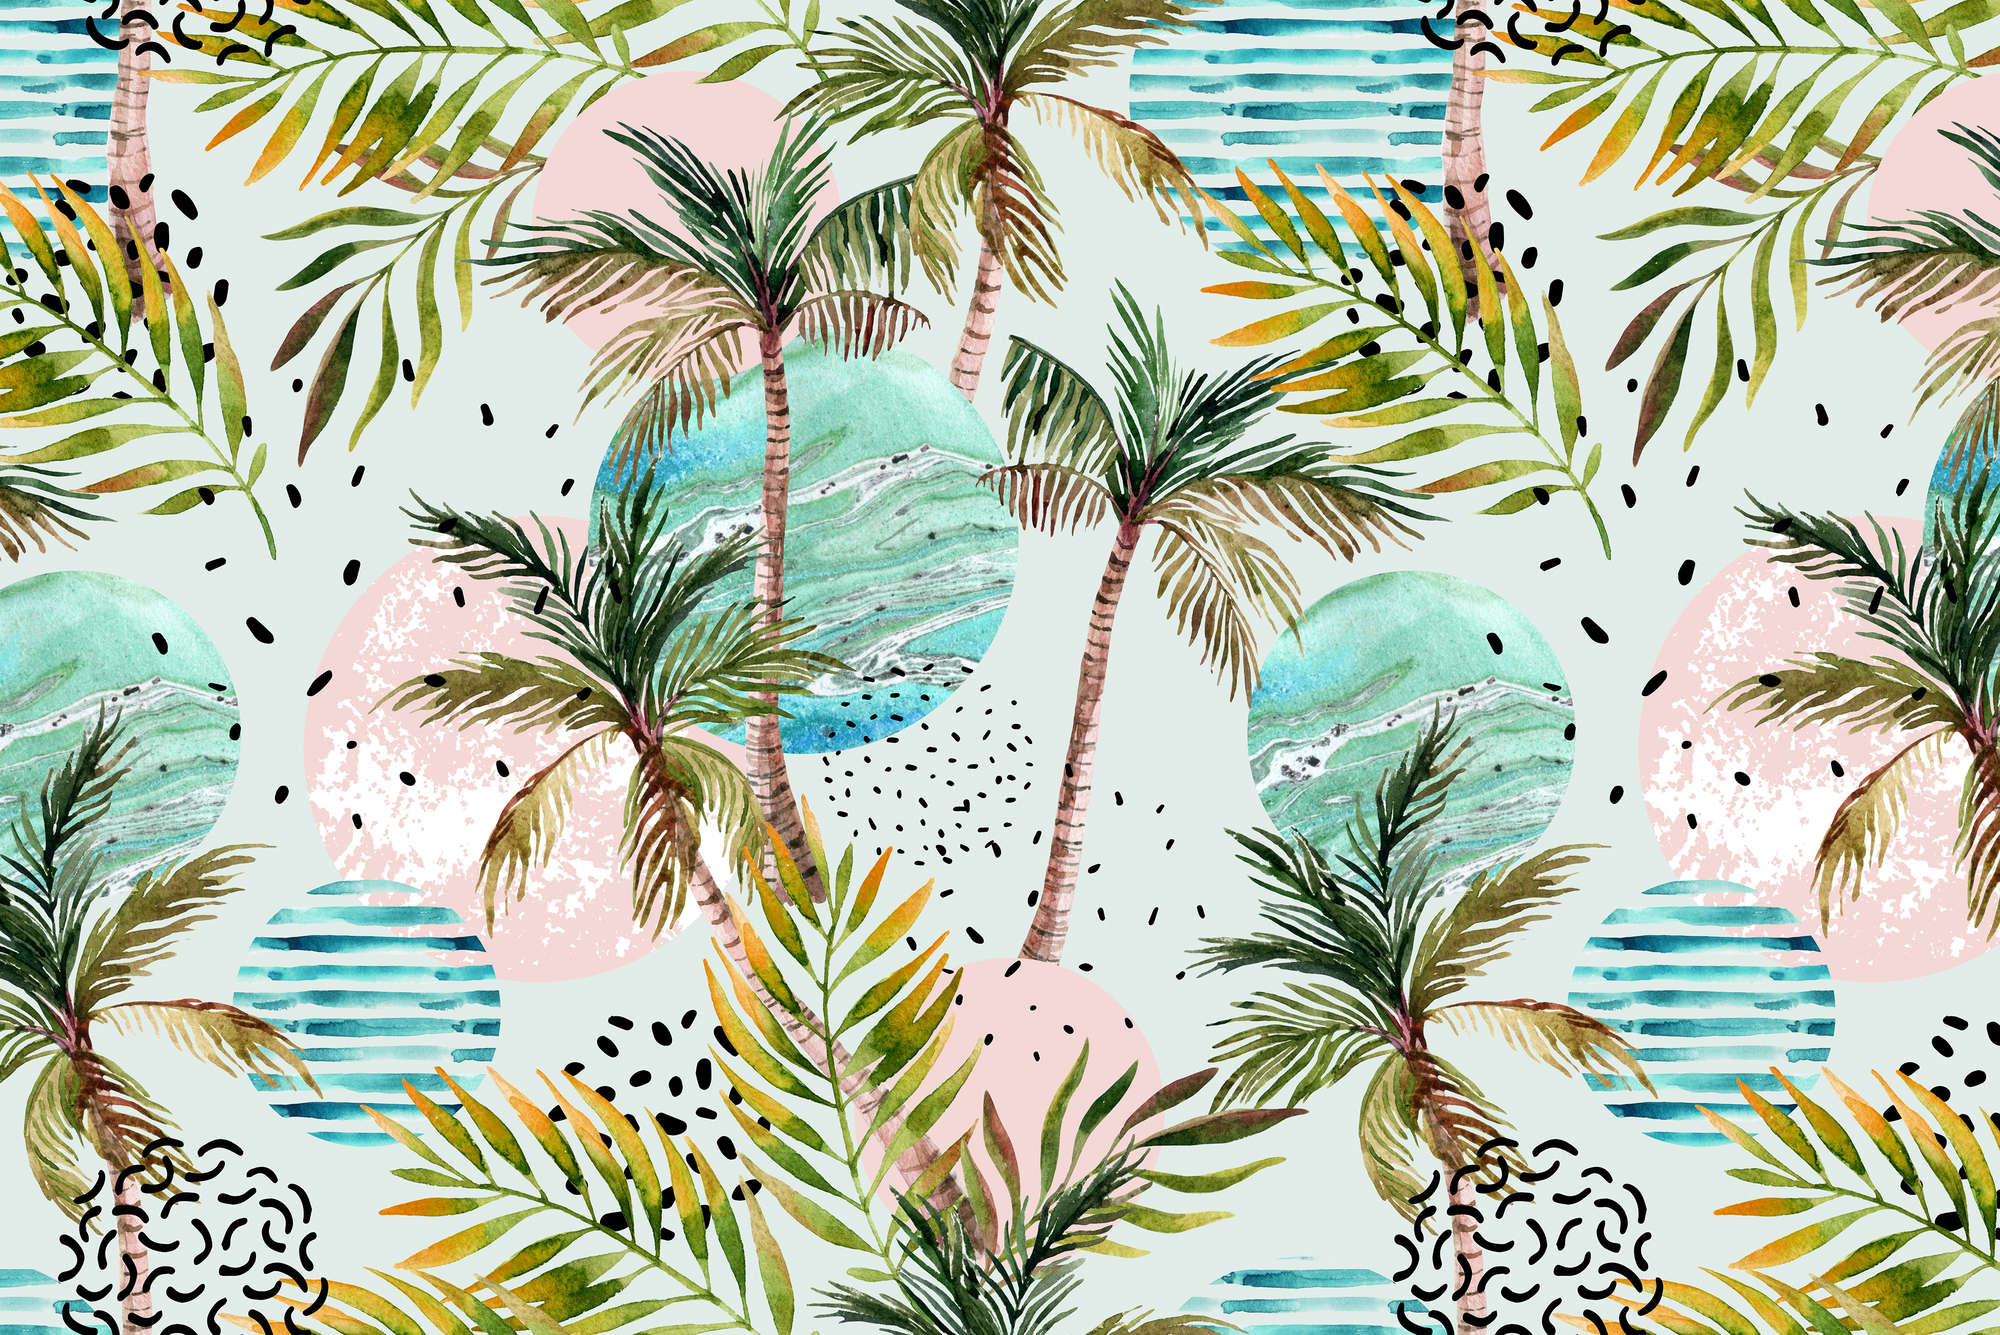             Carta da parati grafica Palm Trees with Wave Symbols su tessuto non tessuto liscio opaco
        